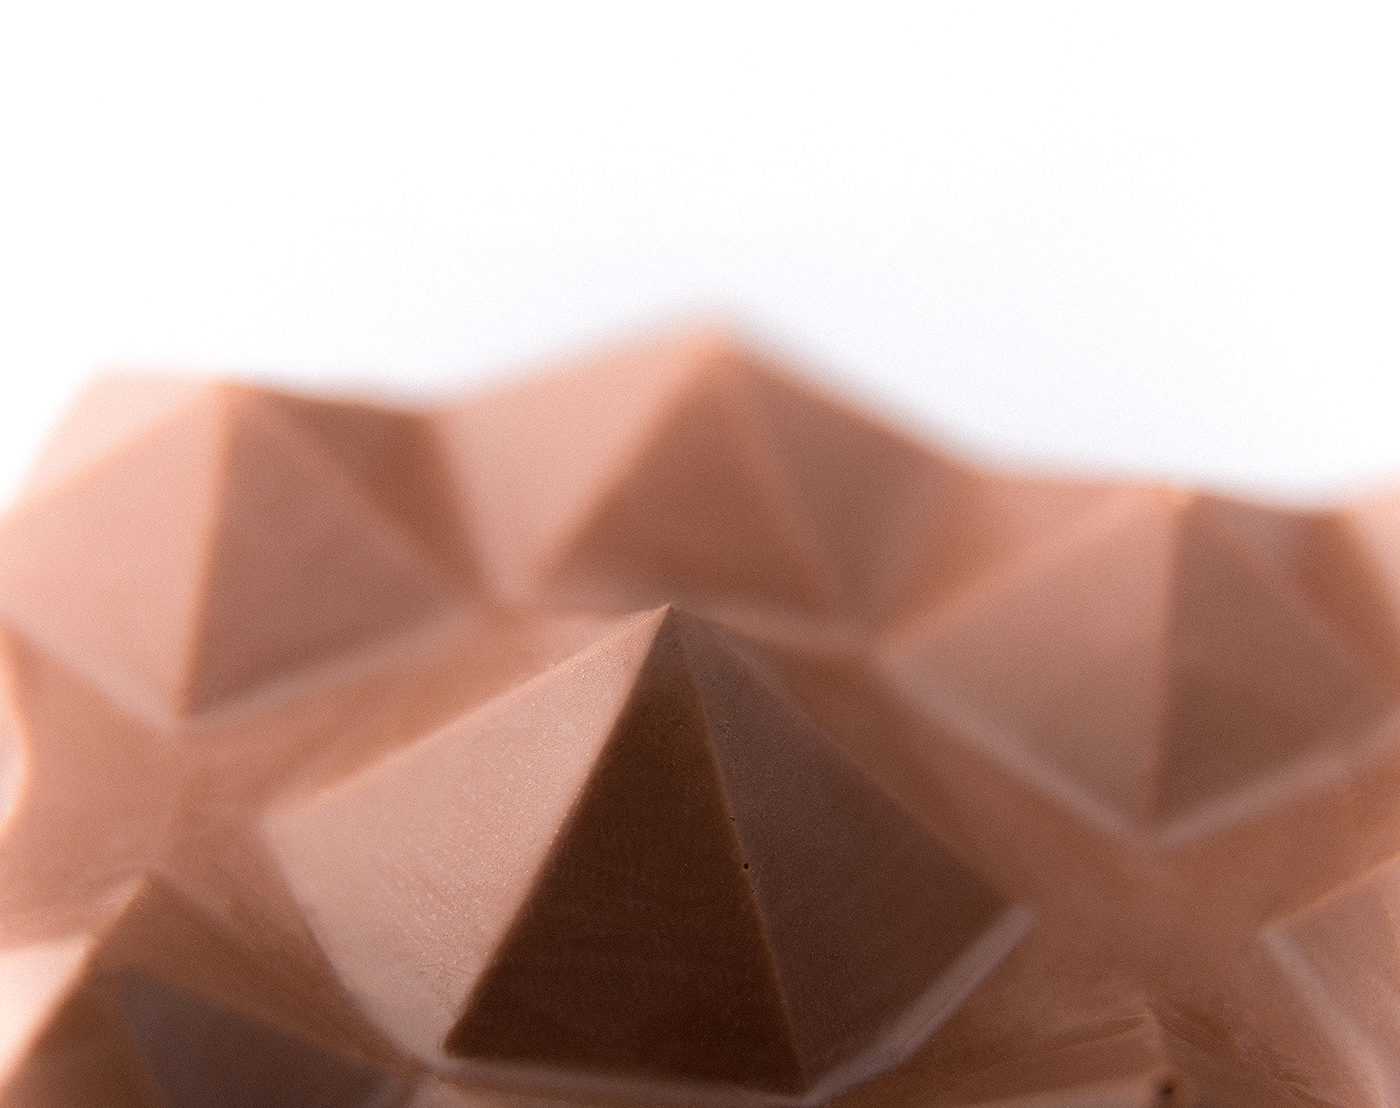 chocolate hotstamping foxtrot Meltz hazelnuts chytry Packaging Italy poland piedmont